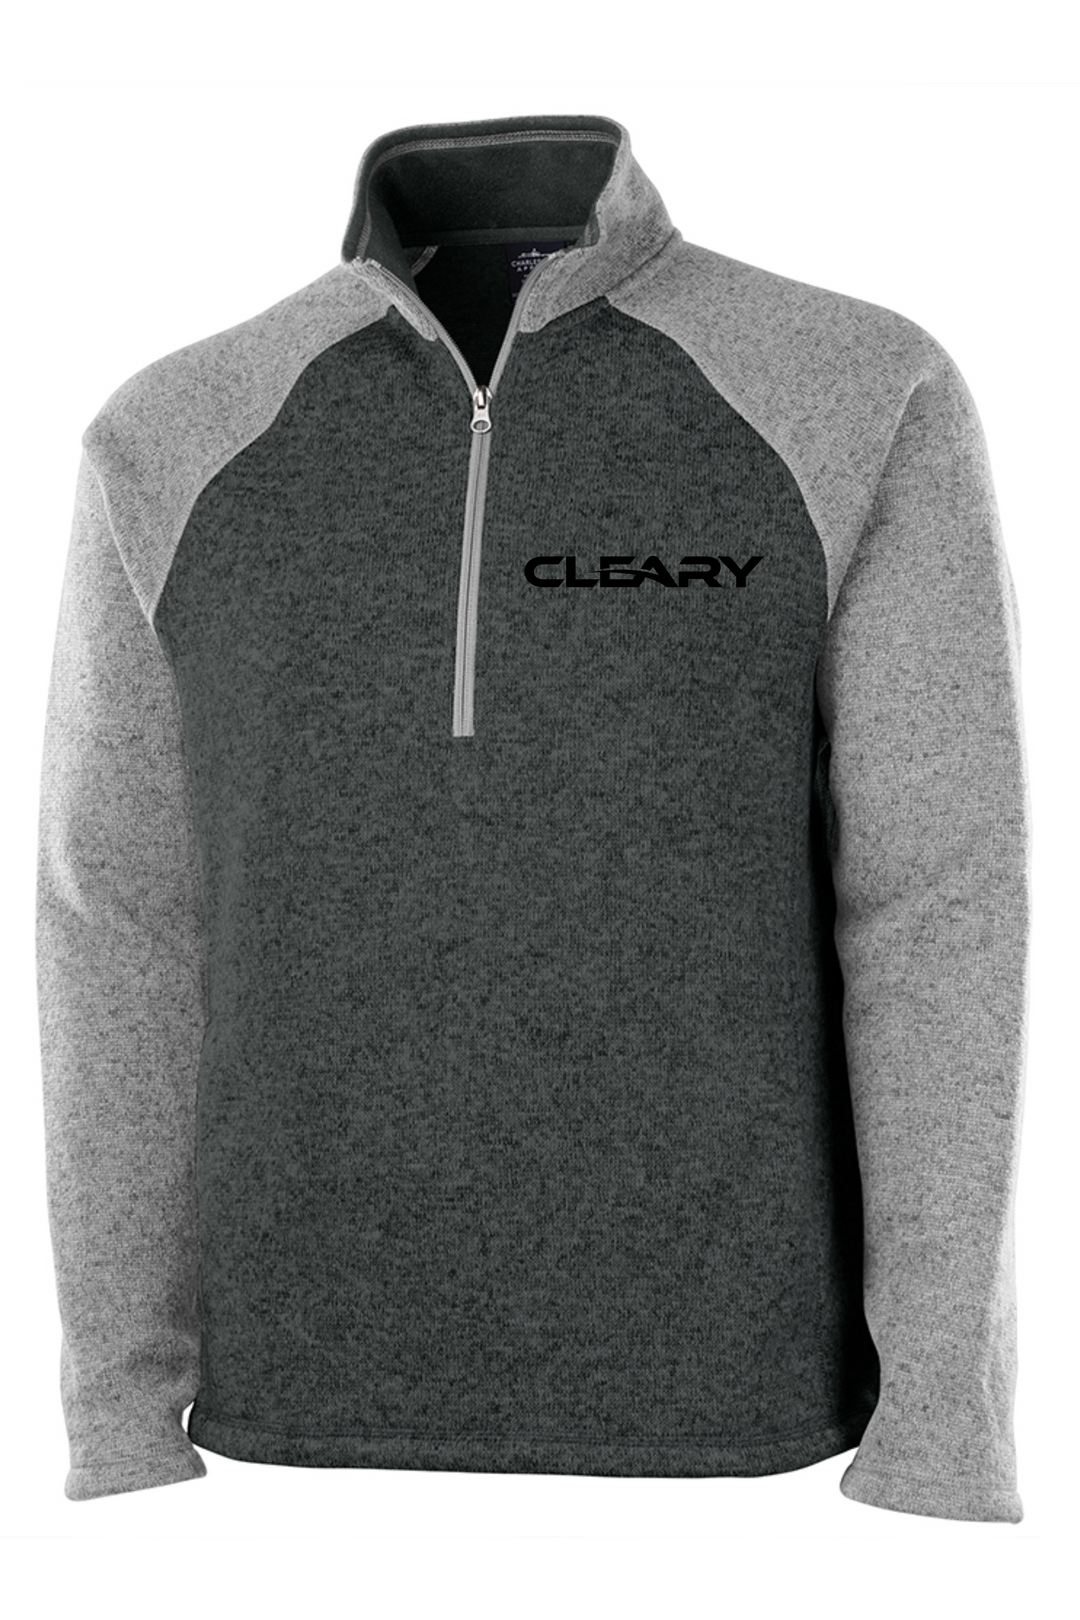 Cleary's Men's Quarter Zip Color Blocked Heathered Fleece Charcoal/Light Grey Heather